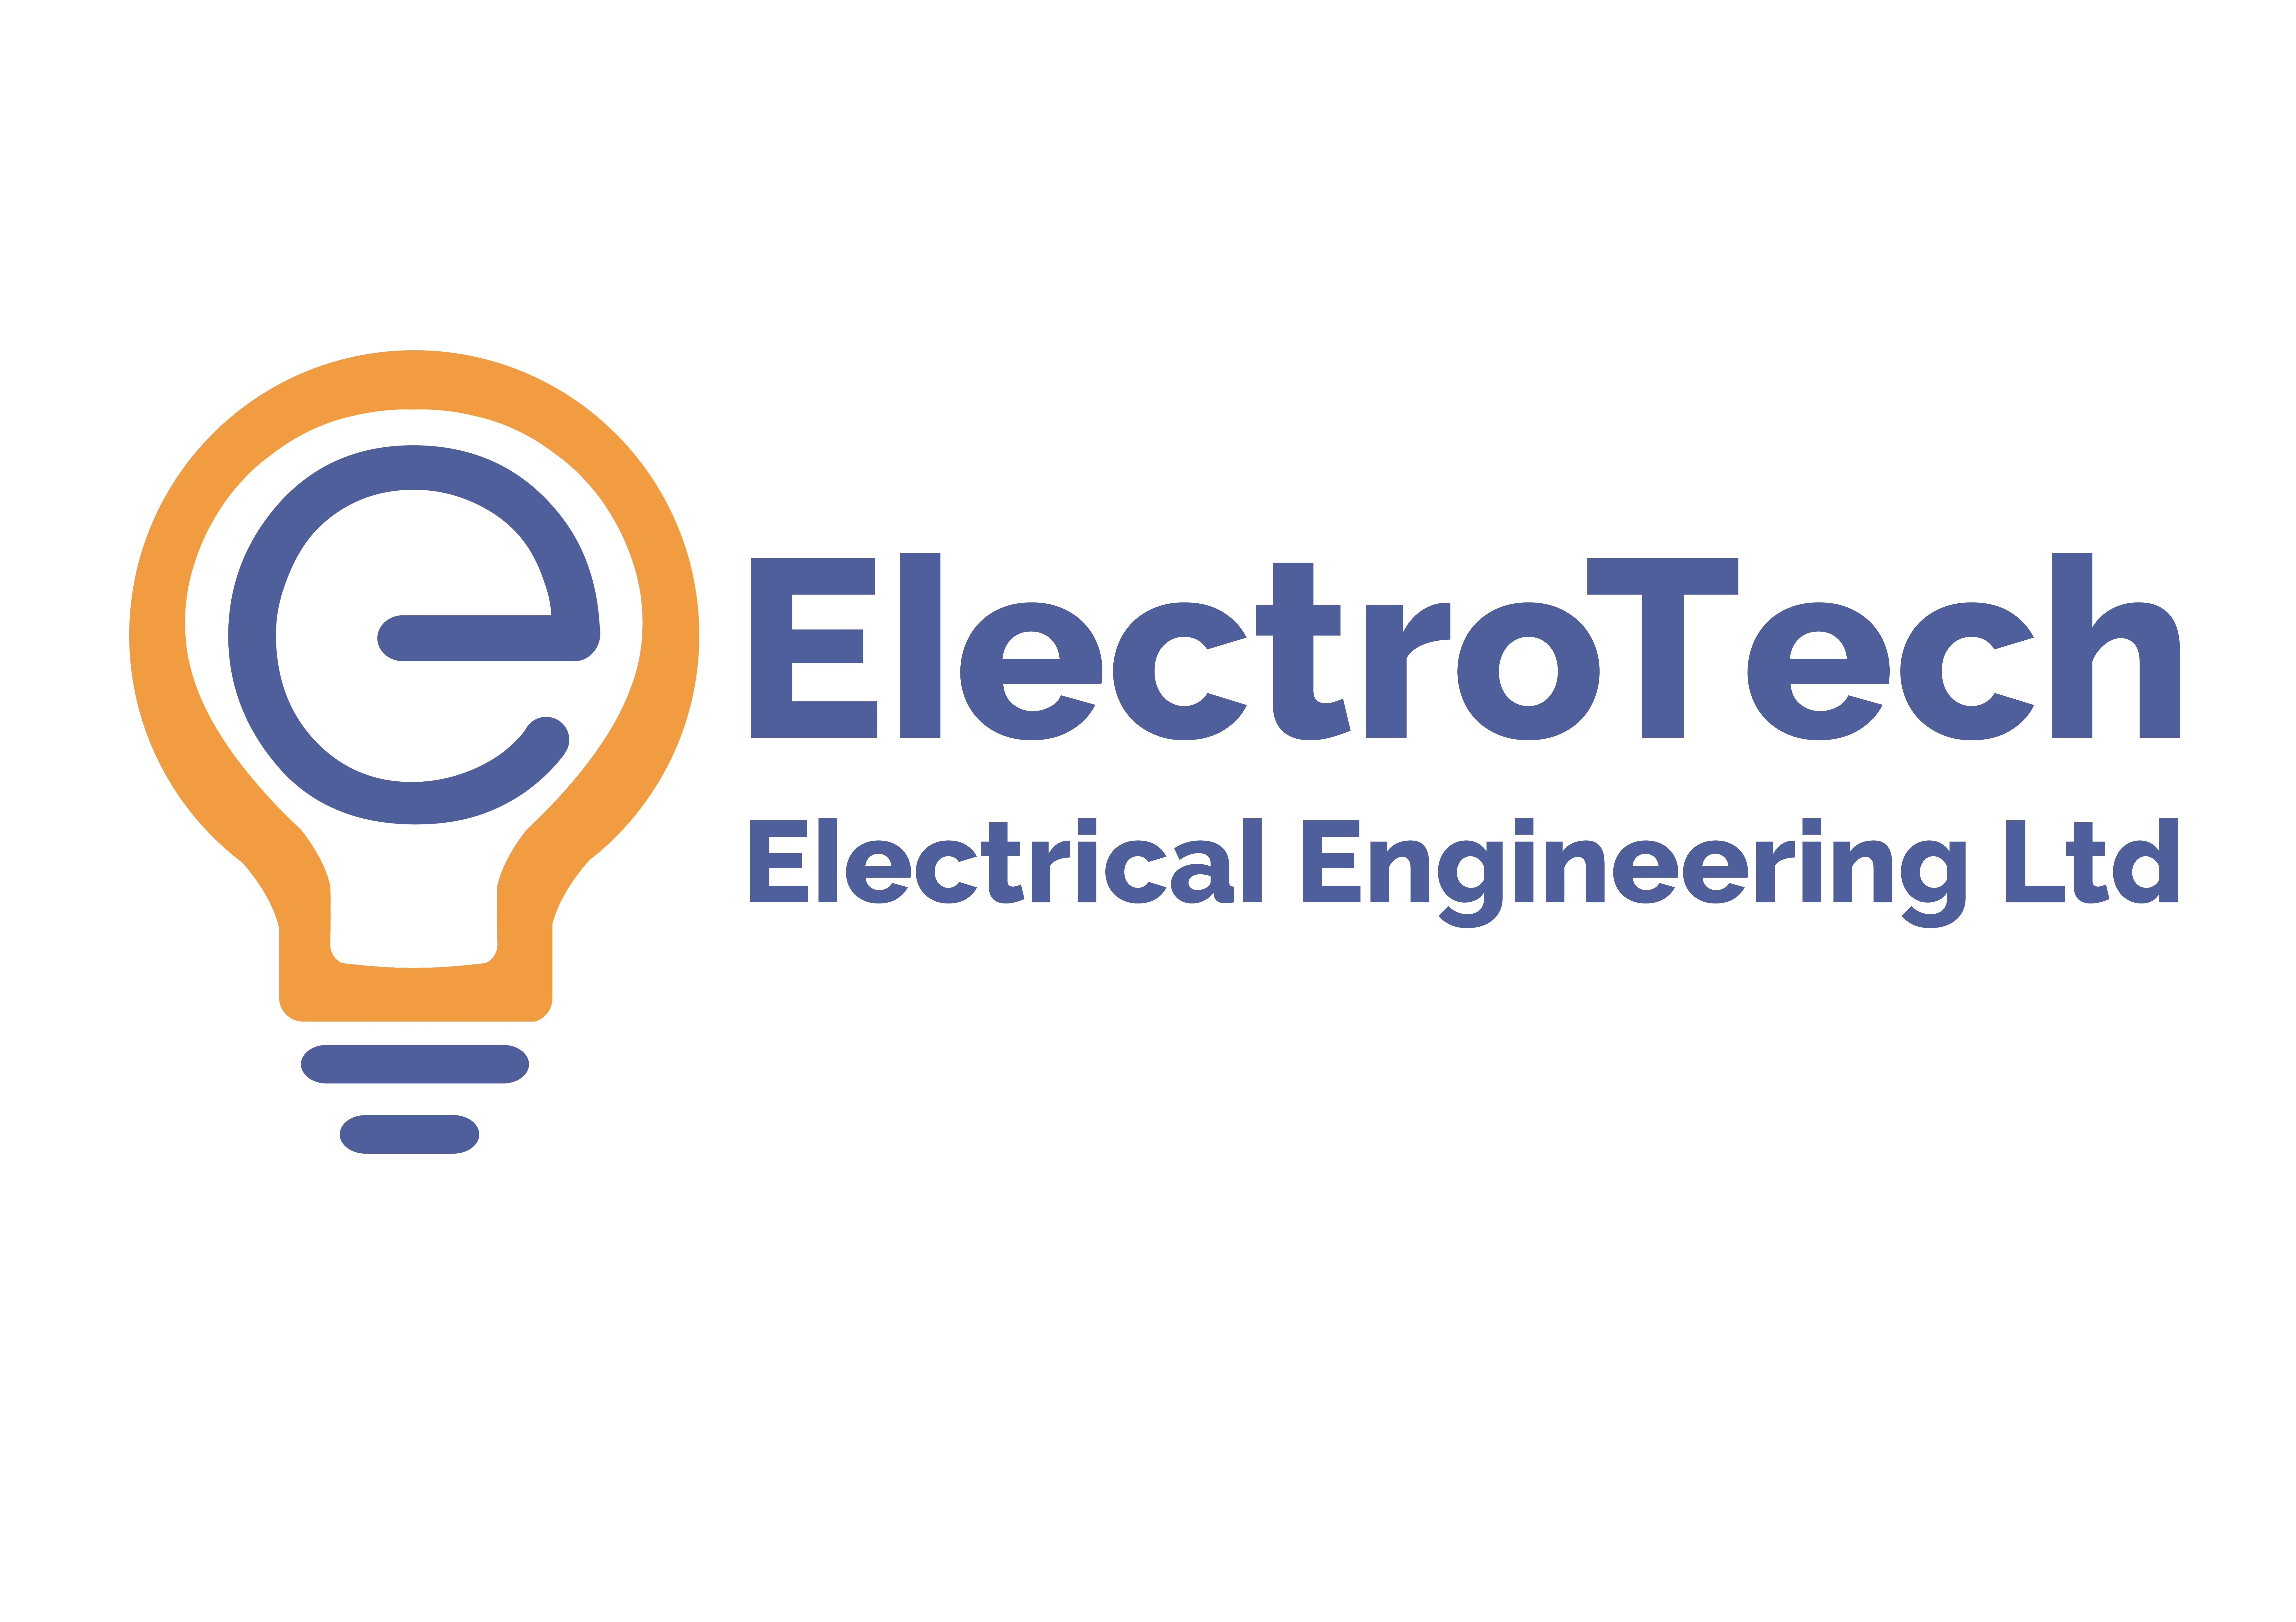 www.electrotechelectricalengineering.co.uk